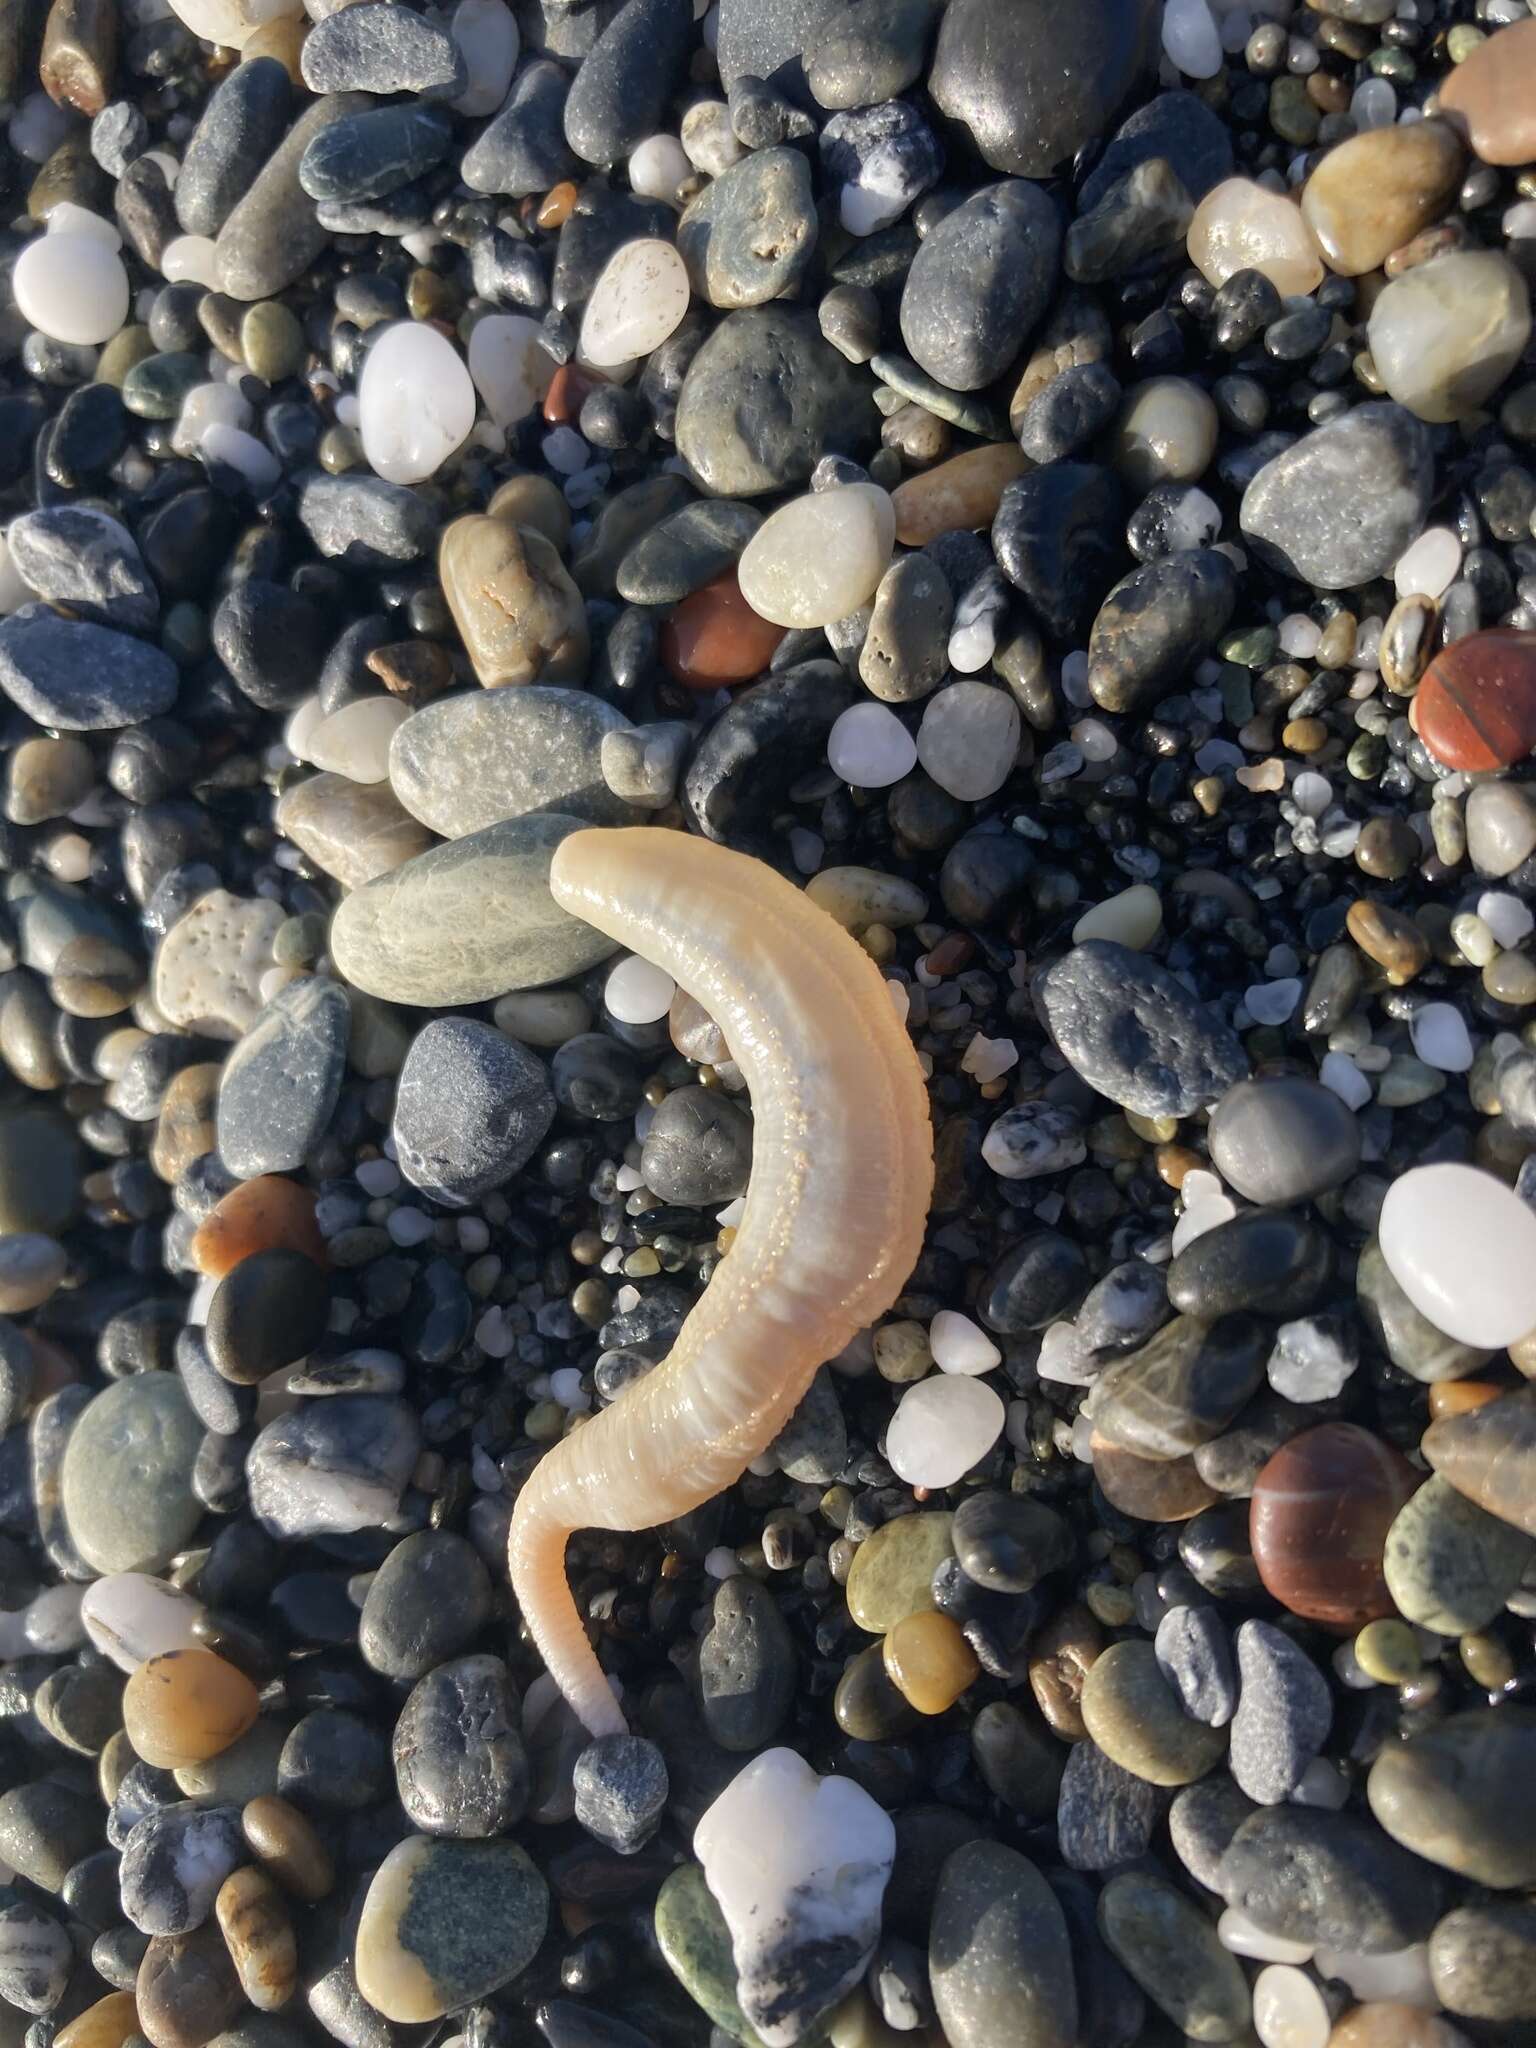 Image of rat-tailed fusiform sea cucumber